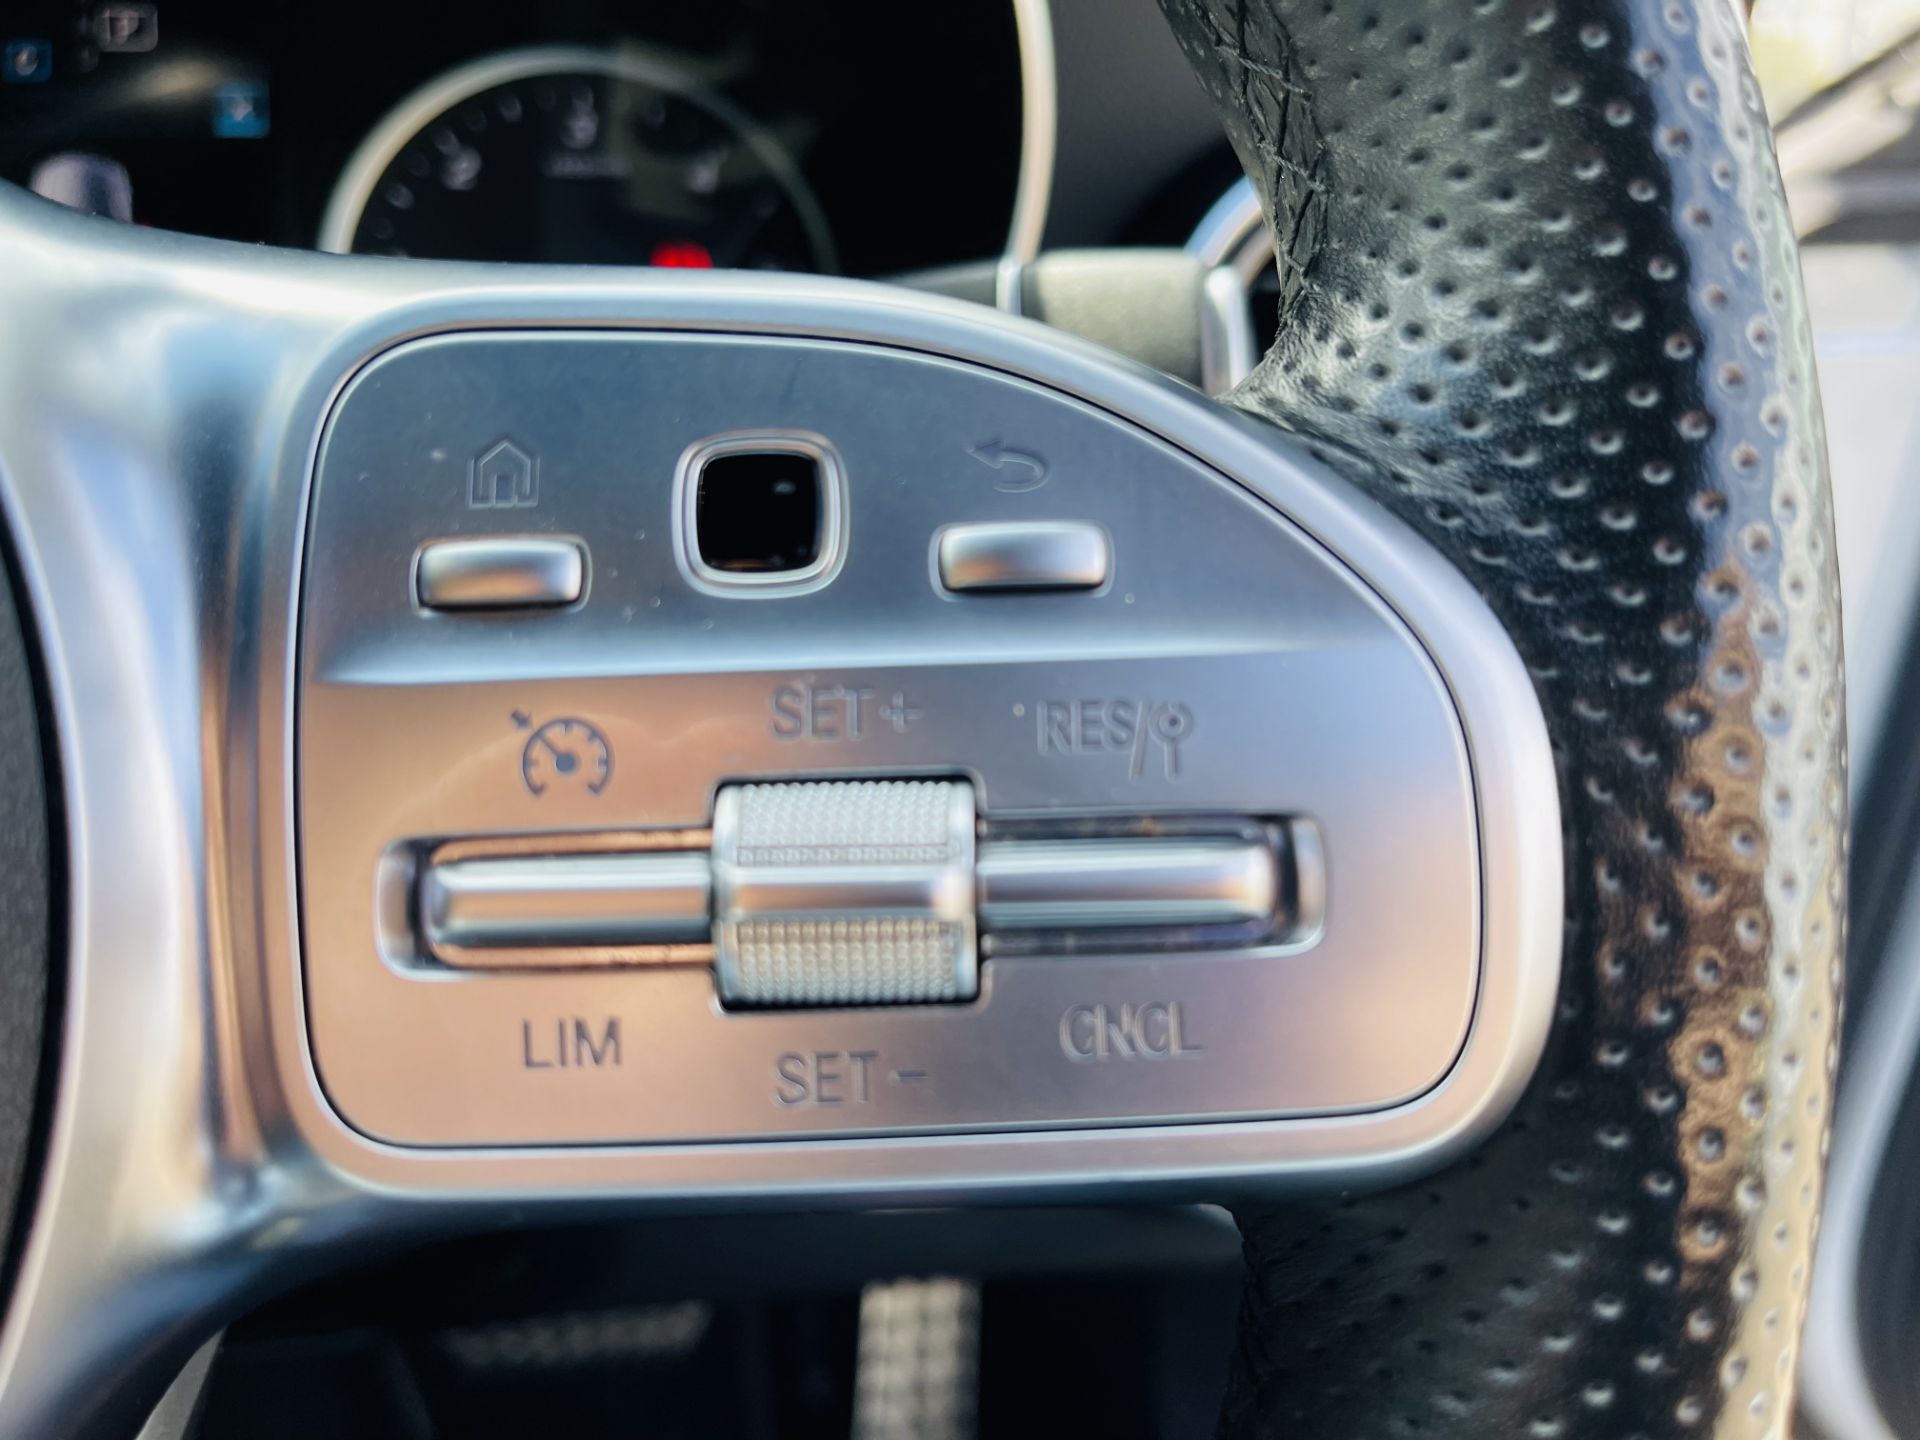 Mercedes Benz C220 AMG Line 9G-Tronic Auto 2019 ‘69 Reg’ - Sat Nav - A/C - Euro 6- ULEZ Compliant - Image 38 of 39